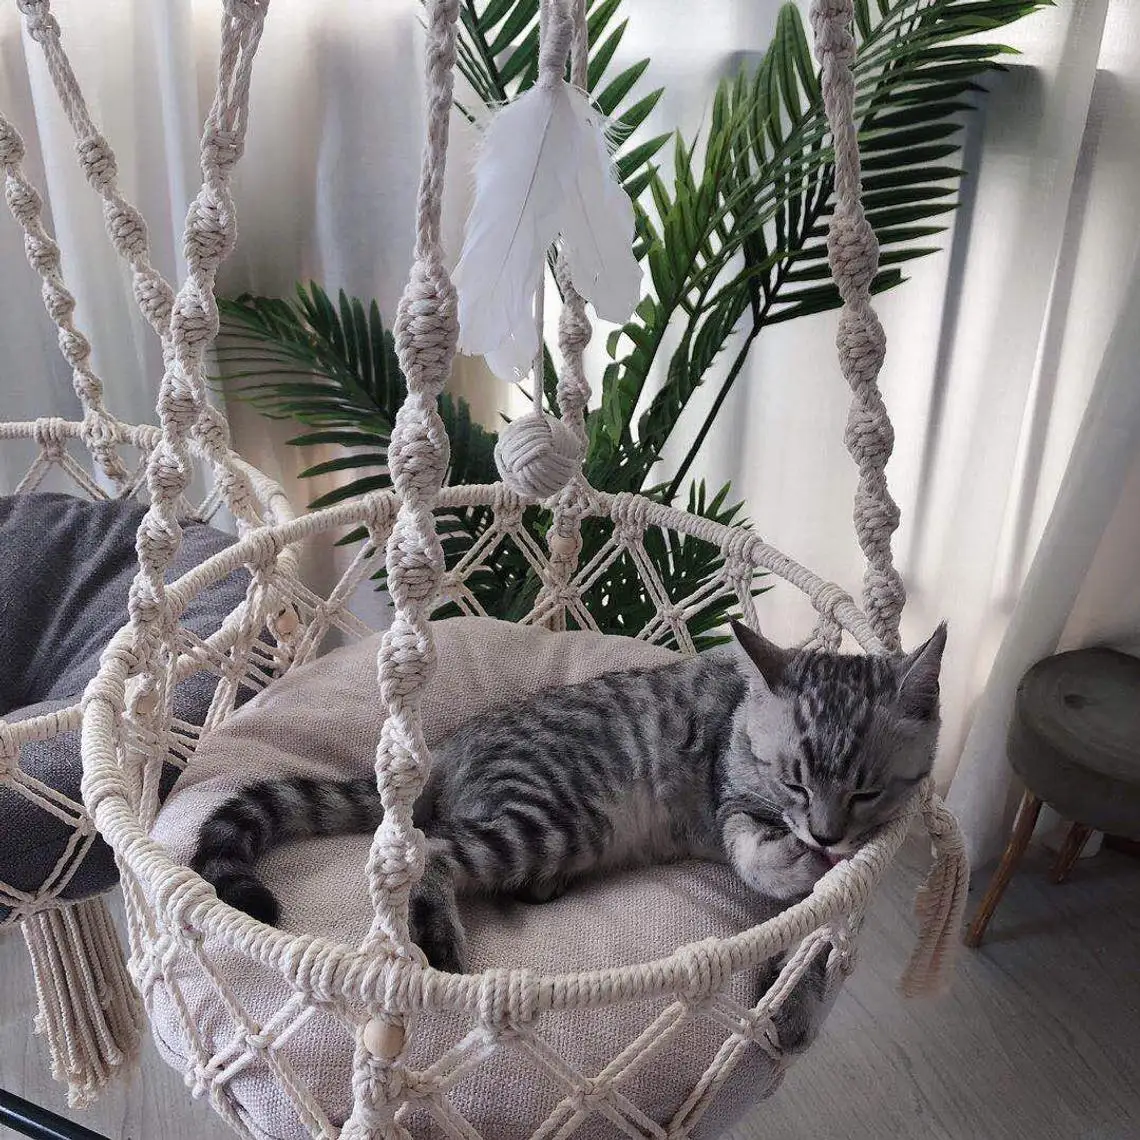 Hanging Cat Bed Cotton Blend Woven Basket Hanging Bed Swing Bed Hanger Macrame Cotton Rope for Pet